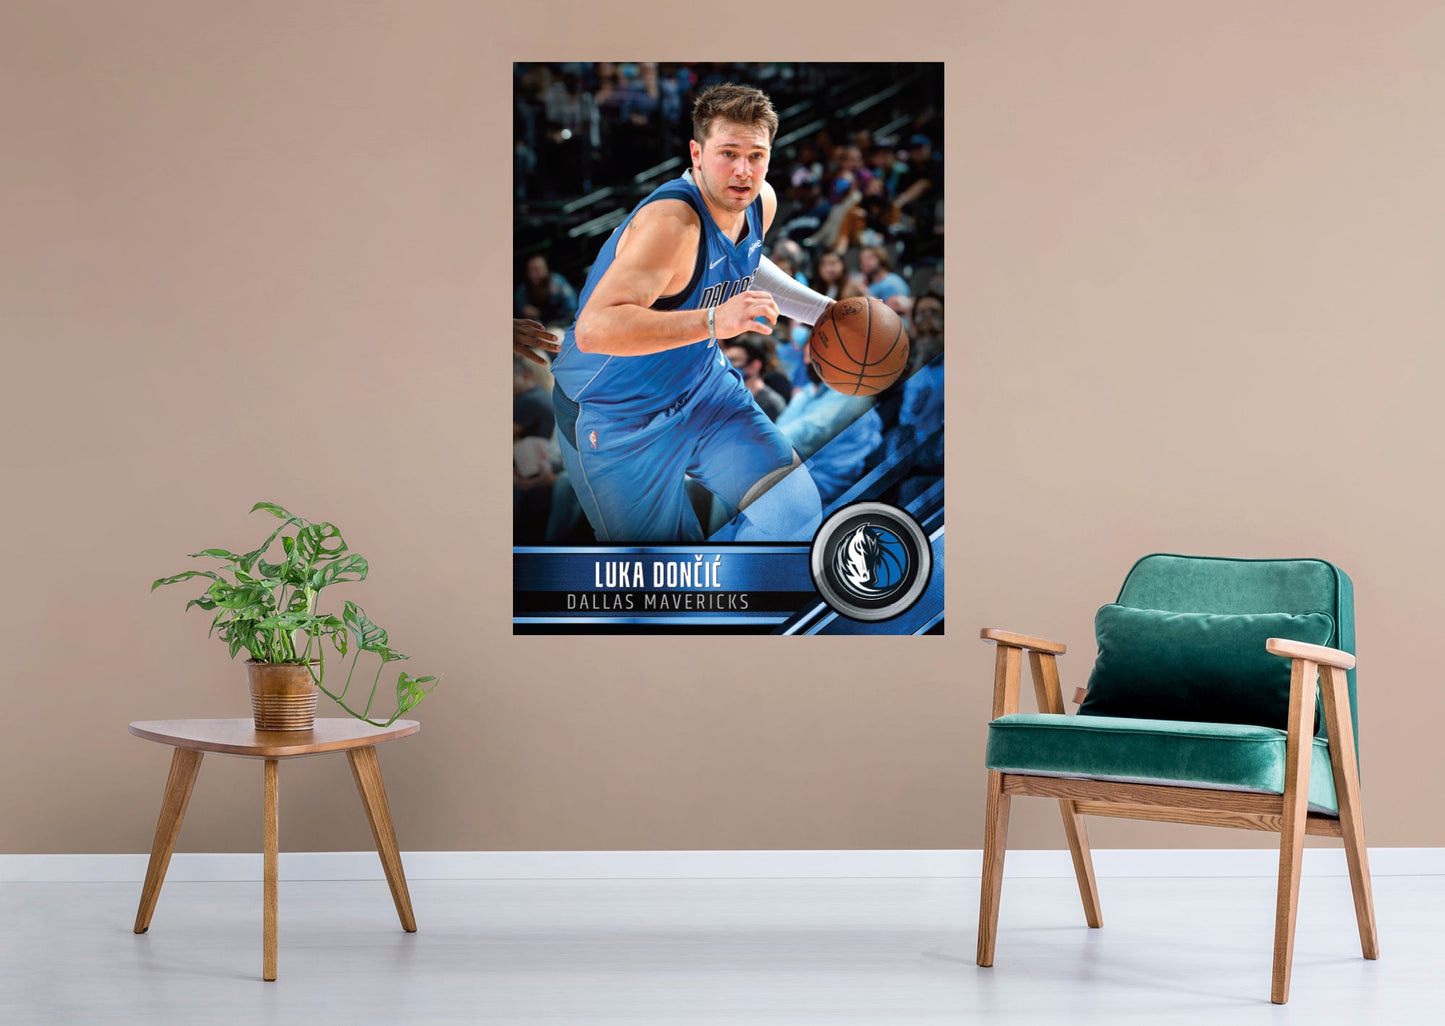 Dallas Mavericks: Luka Donƒçiƒá Poster - Officially Licensed NBA Removable Adhesive Decal